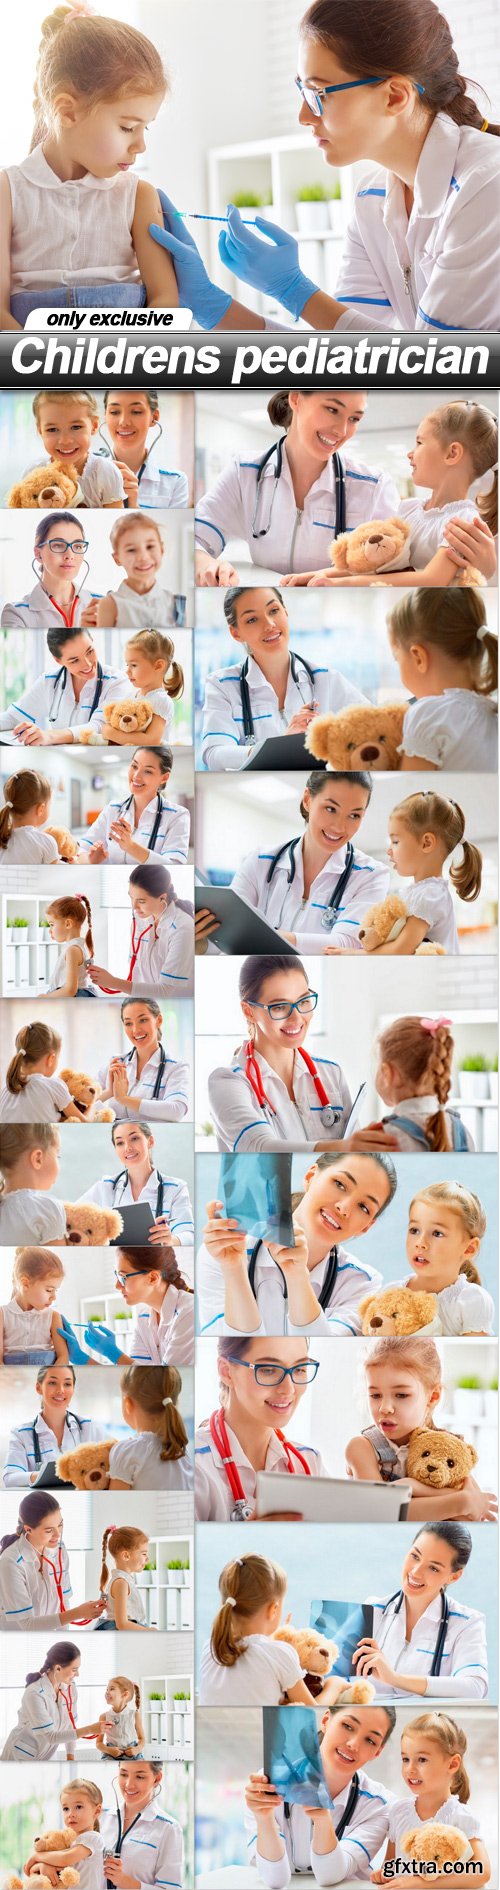 Childrens pediatrician - 20 UHQ JPEG